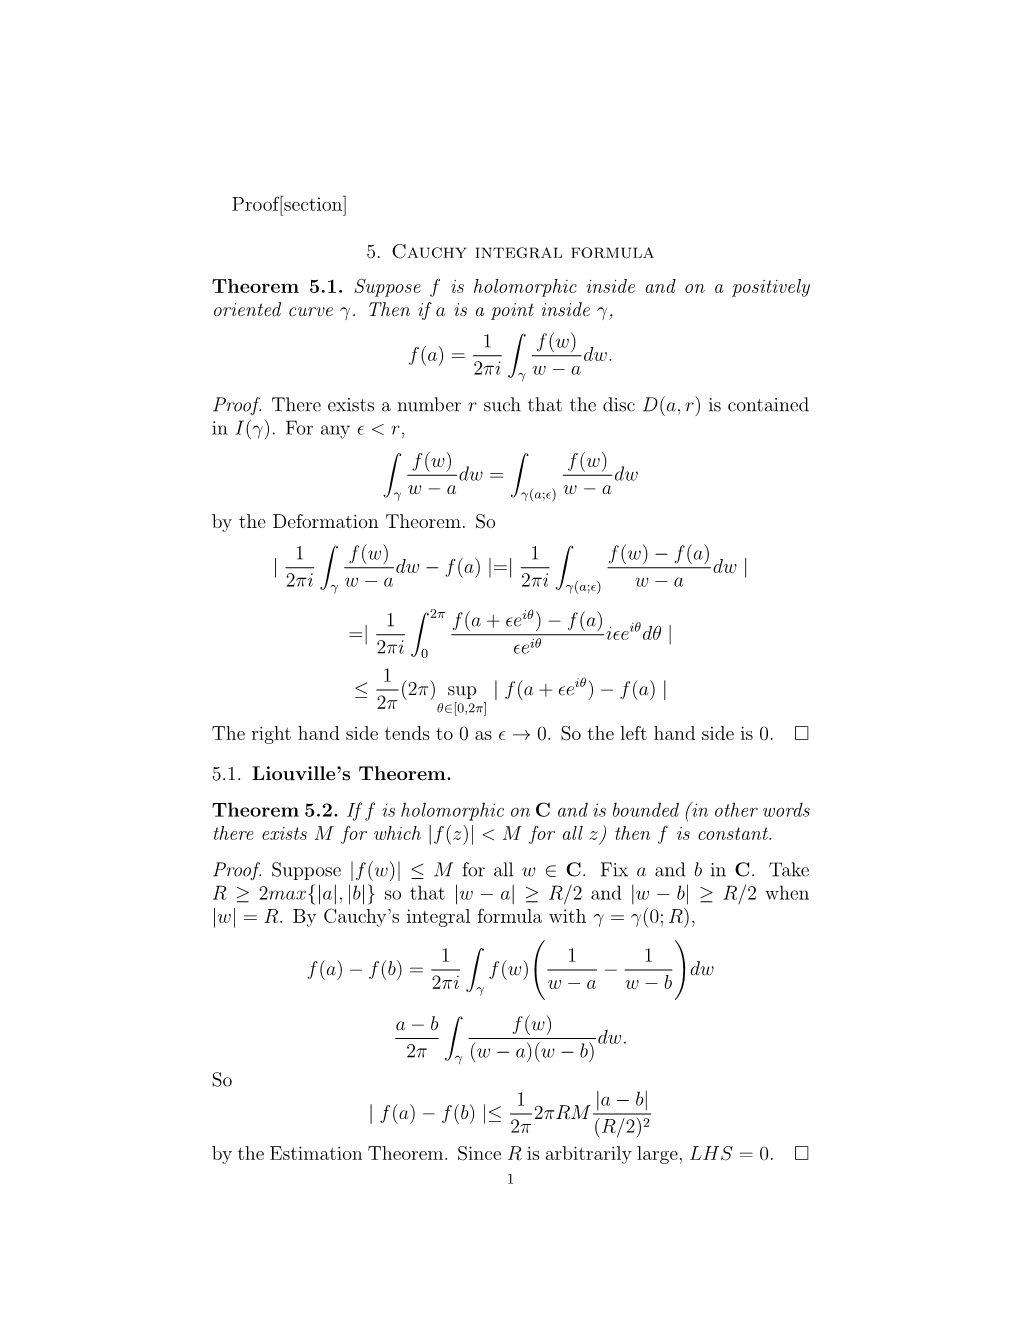 Cauchy Integral Formula Theorem 5.1